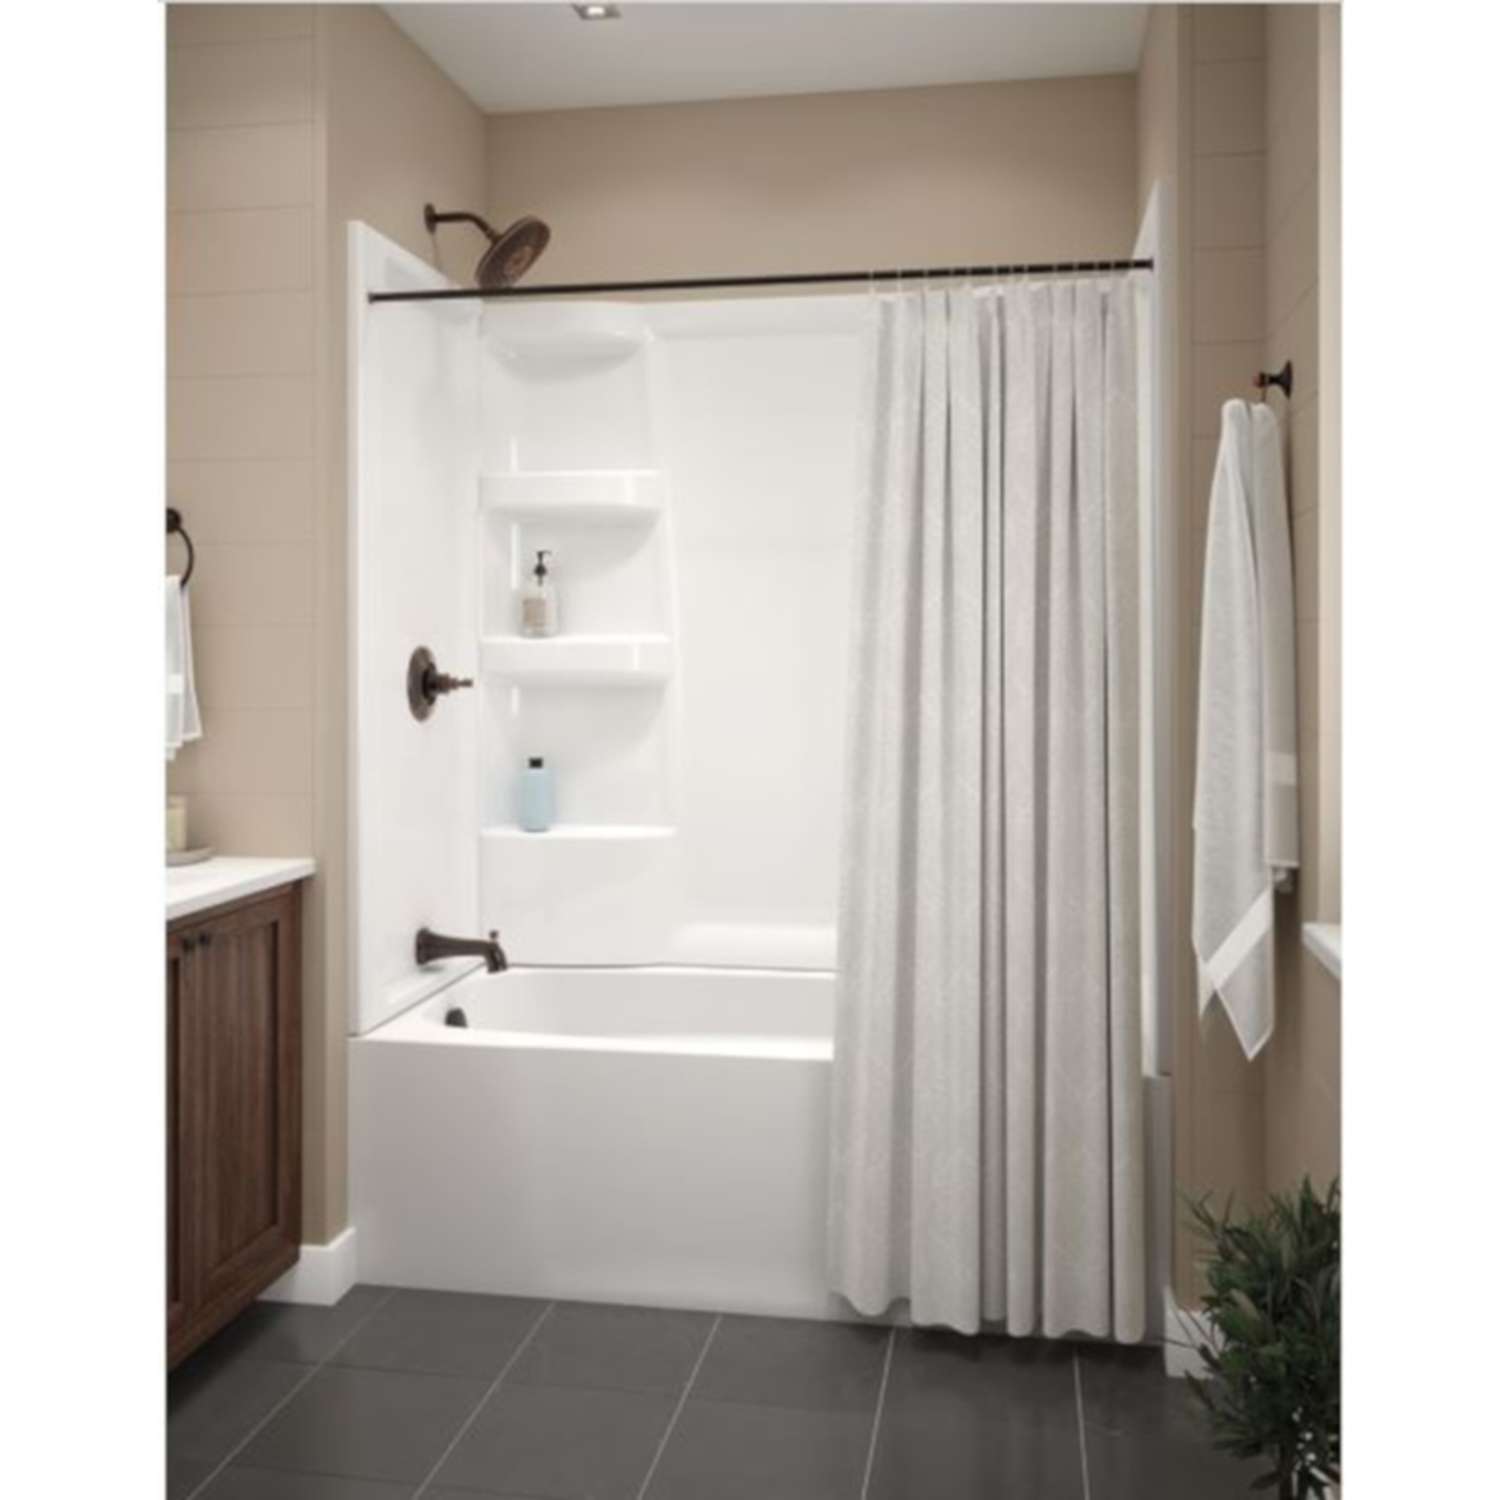 1pc Adhesive Angle Shelf For Bathroom, Kitchen, Toilet, Bathtub